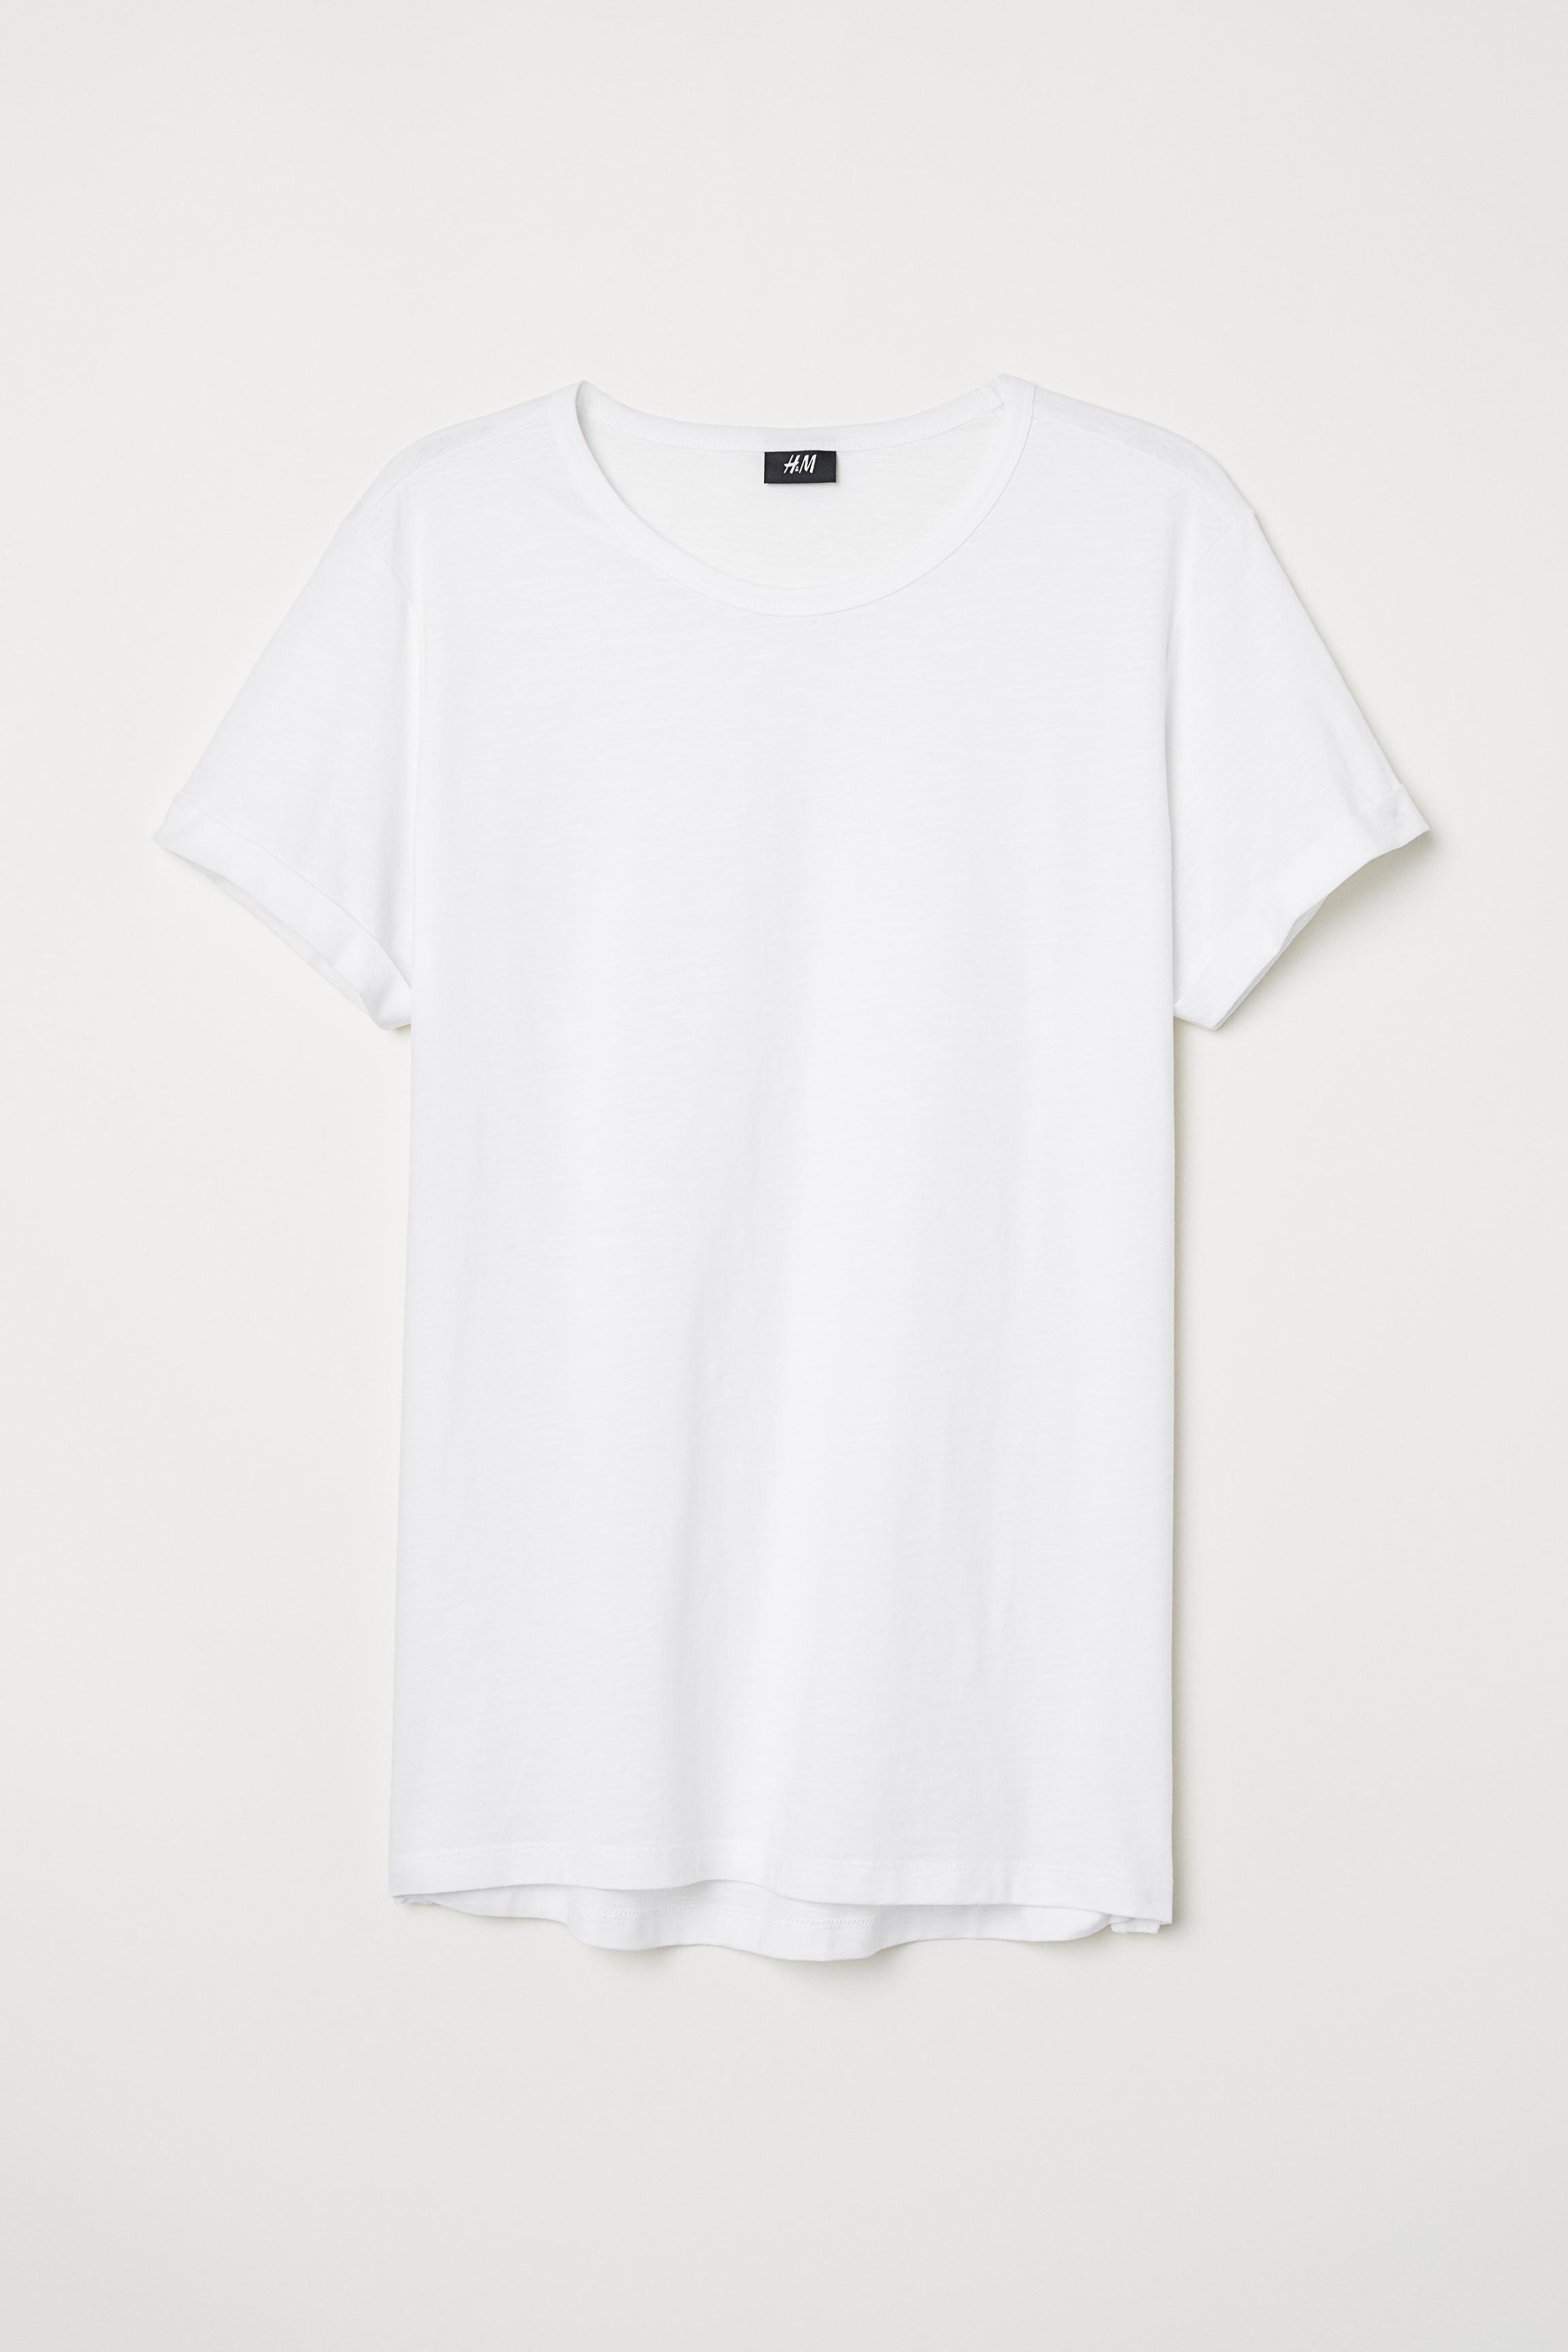 H&M Cotton Slub Jersey T-shirt in White for Men - Lyst